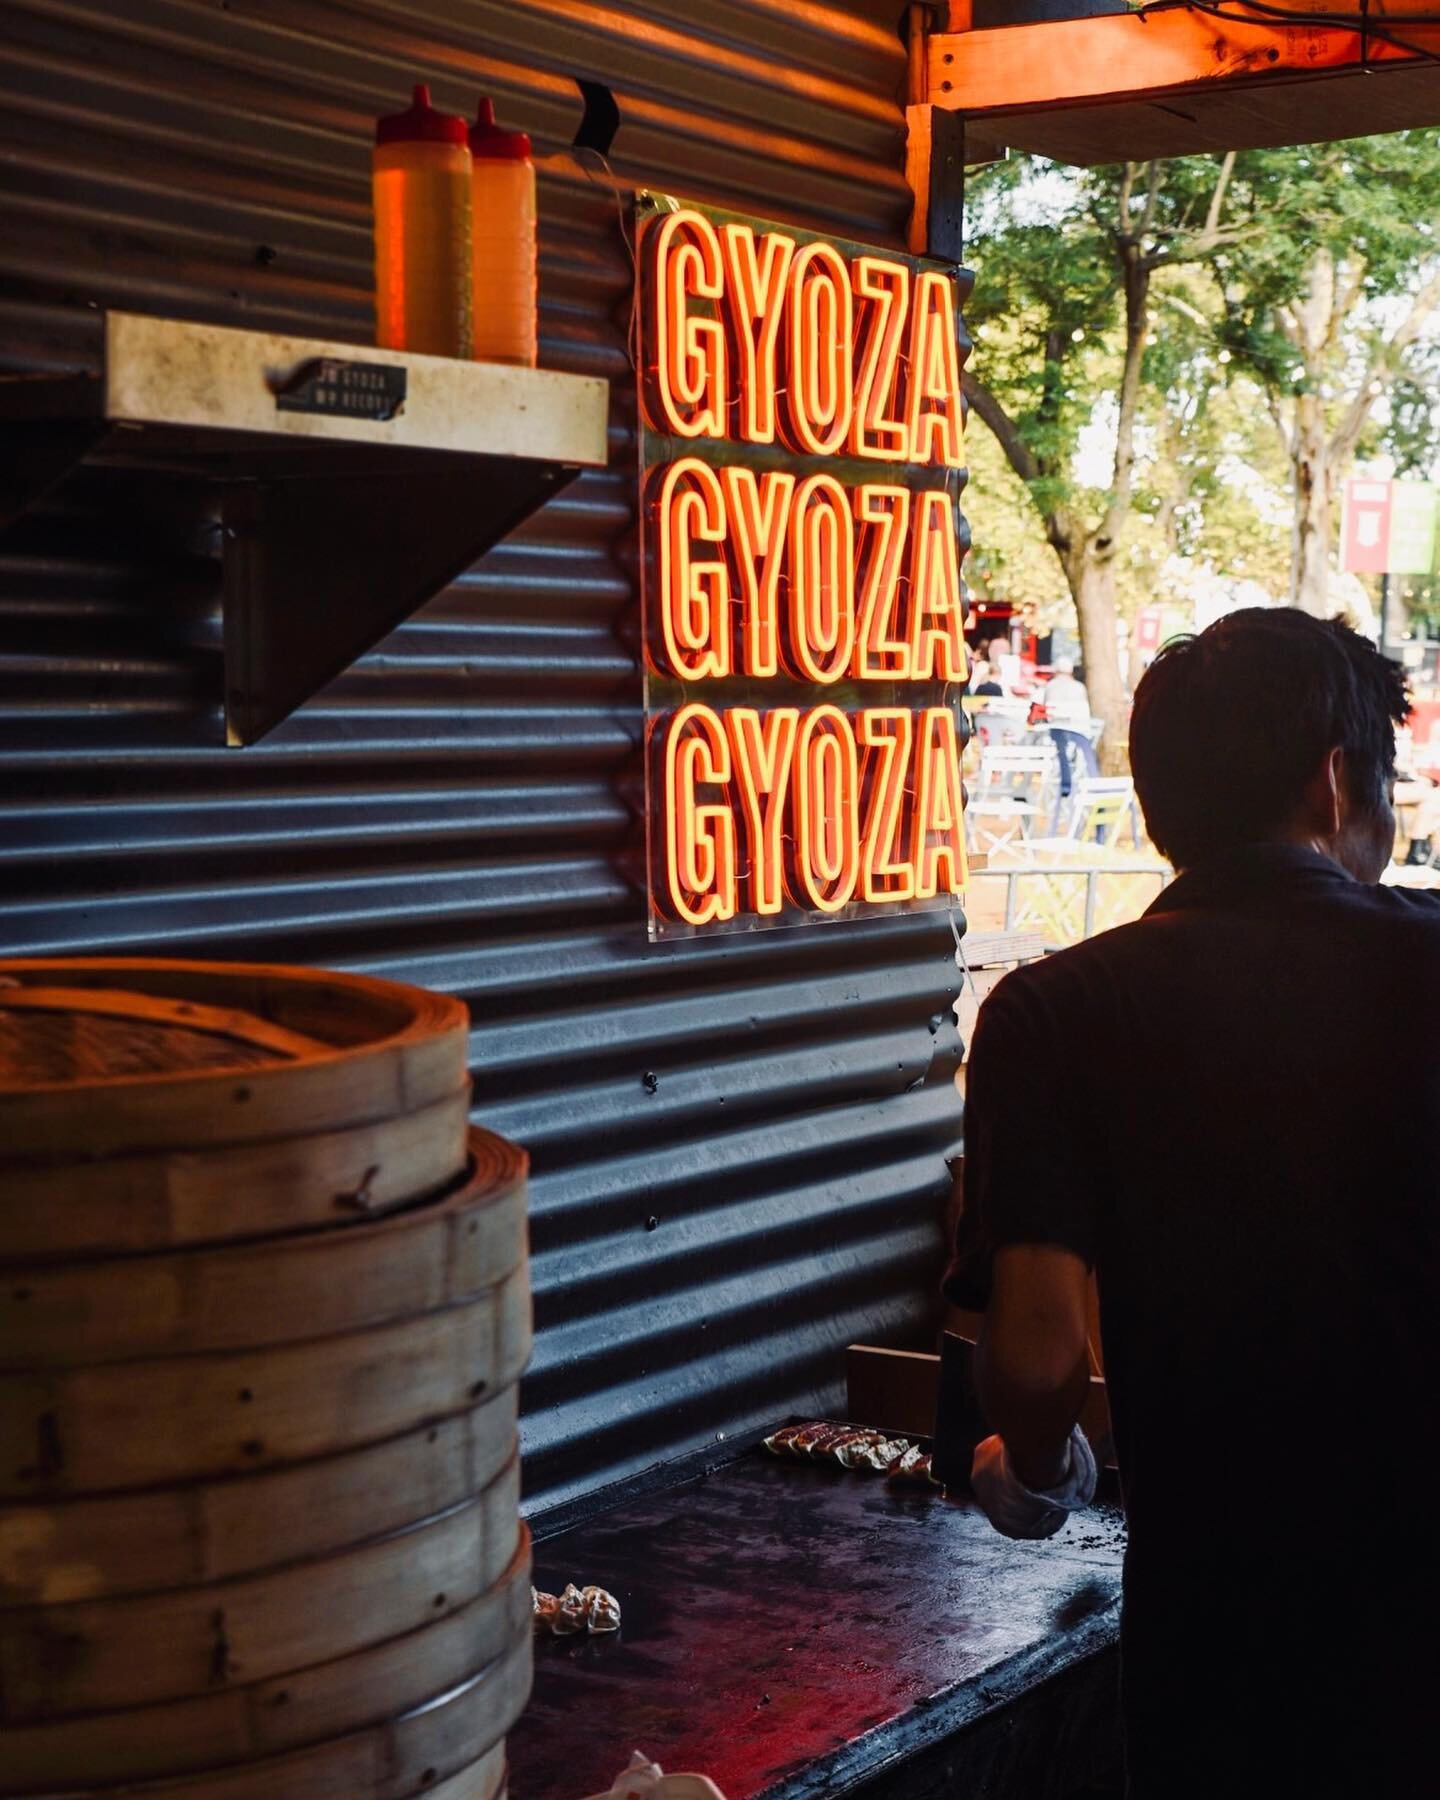 Gyoza chef never sleeps #nosleep #festivallife #summerseason #foodtruck #gardenofunearthlydelights #foodtrucklife #southaustralia #victoria